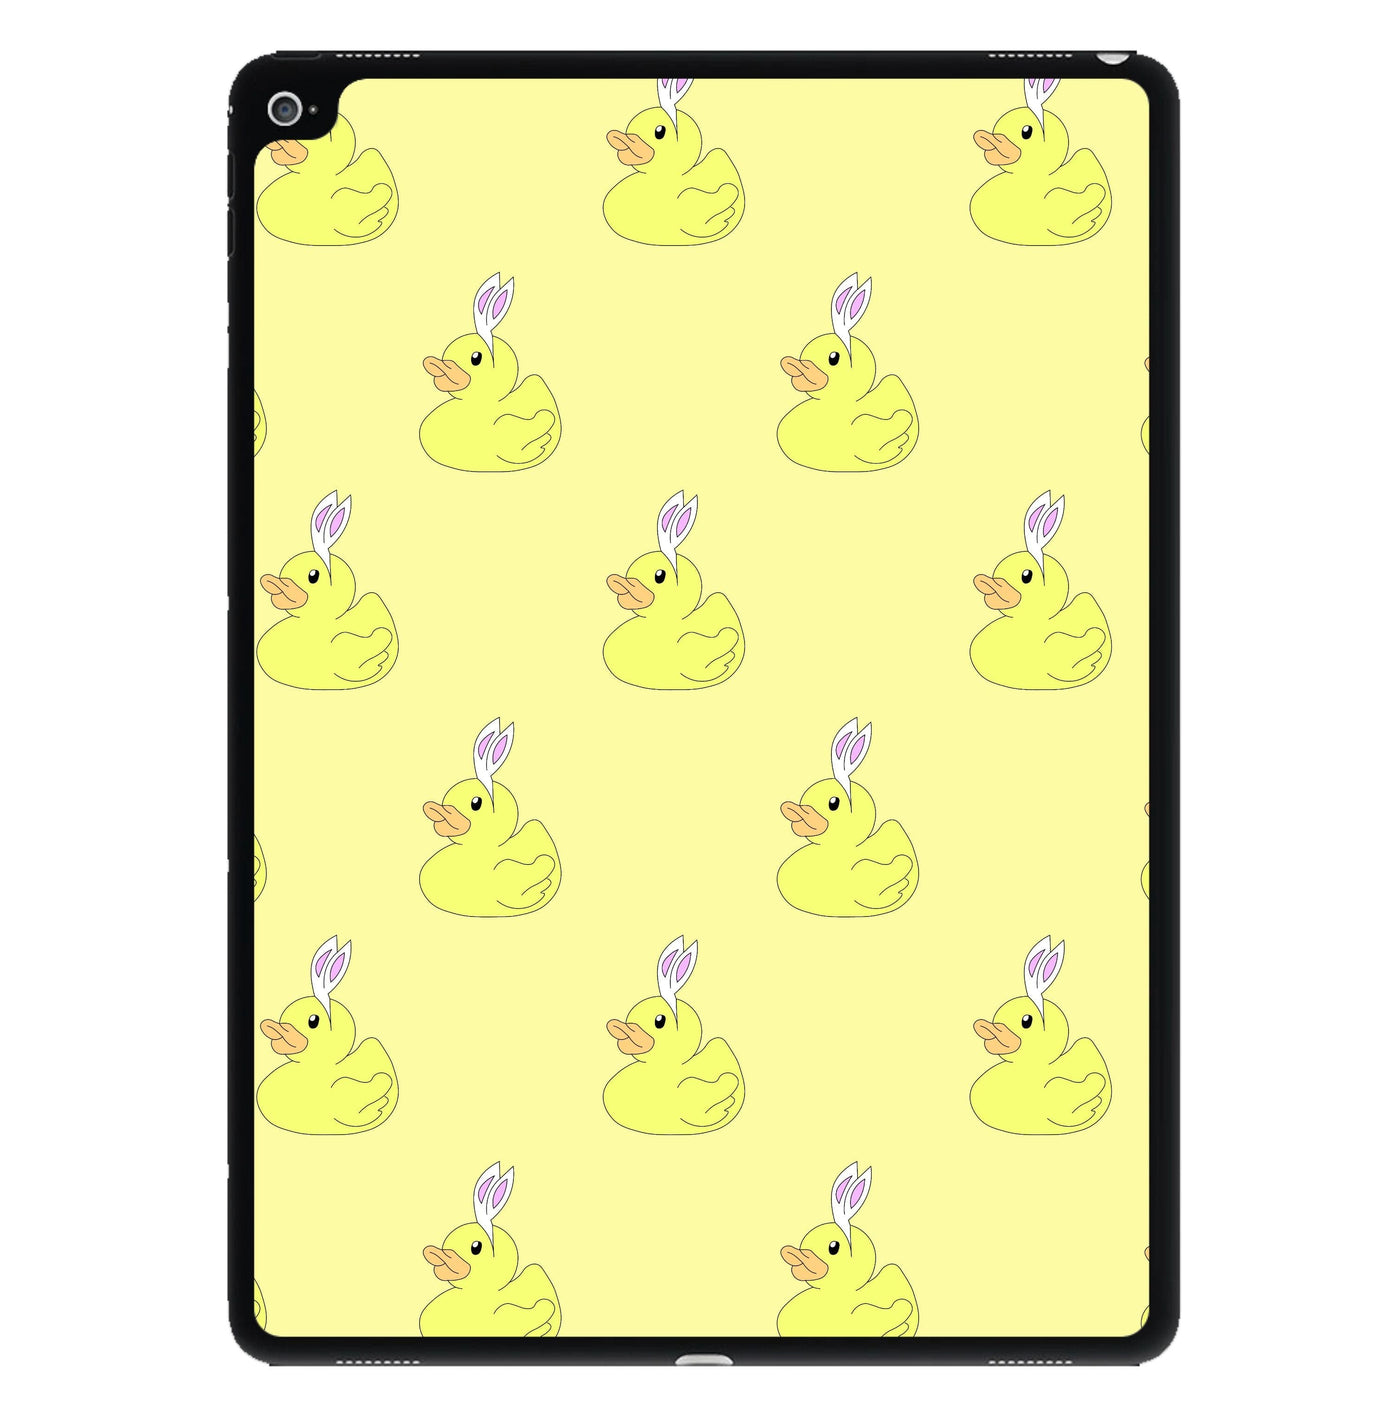 Rubber Ducks - Easter Patterns iPad Case